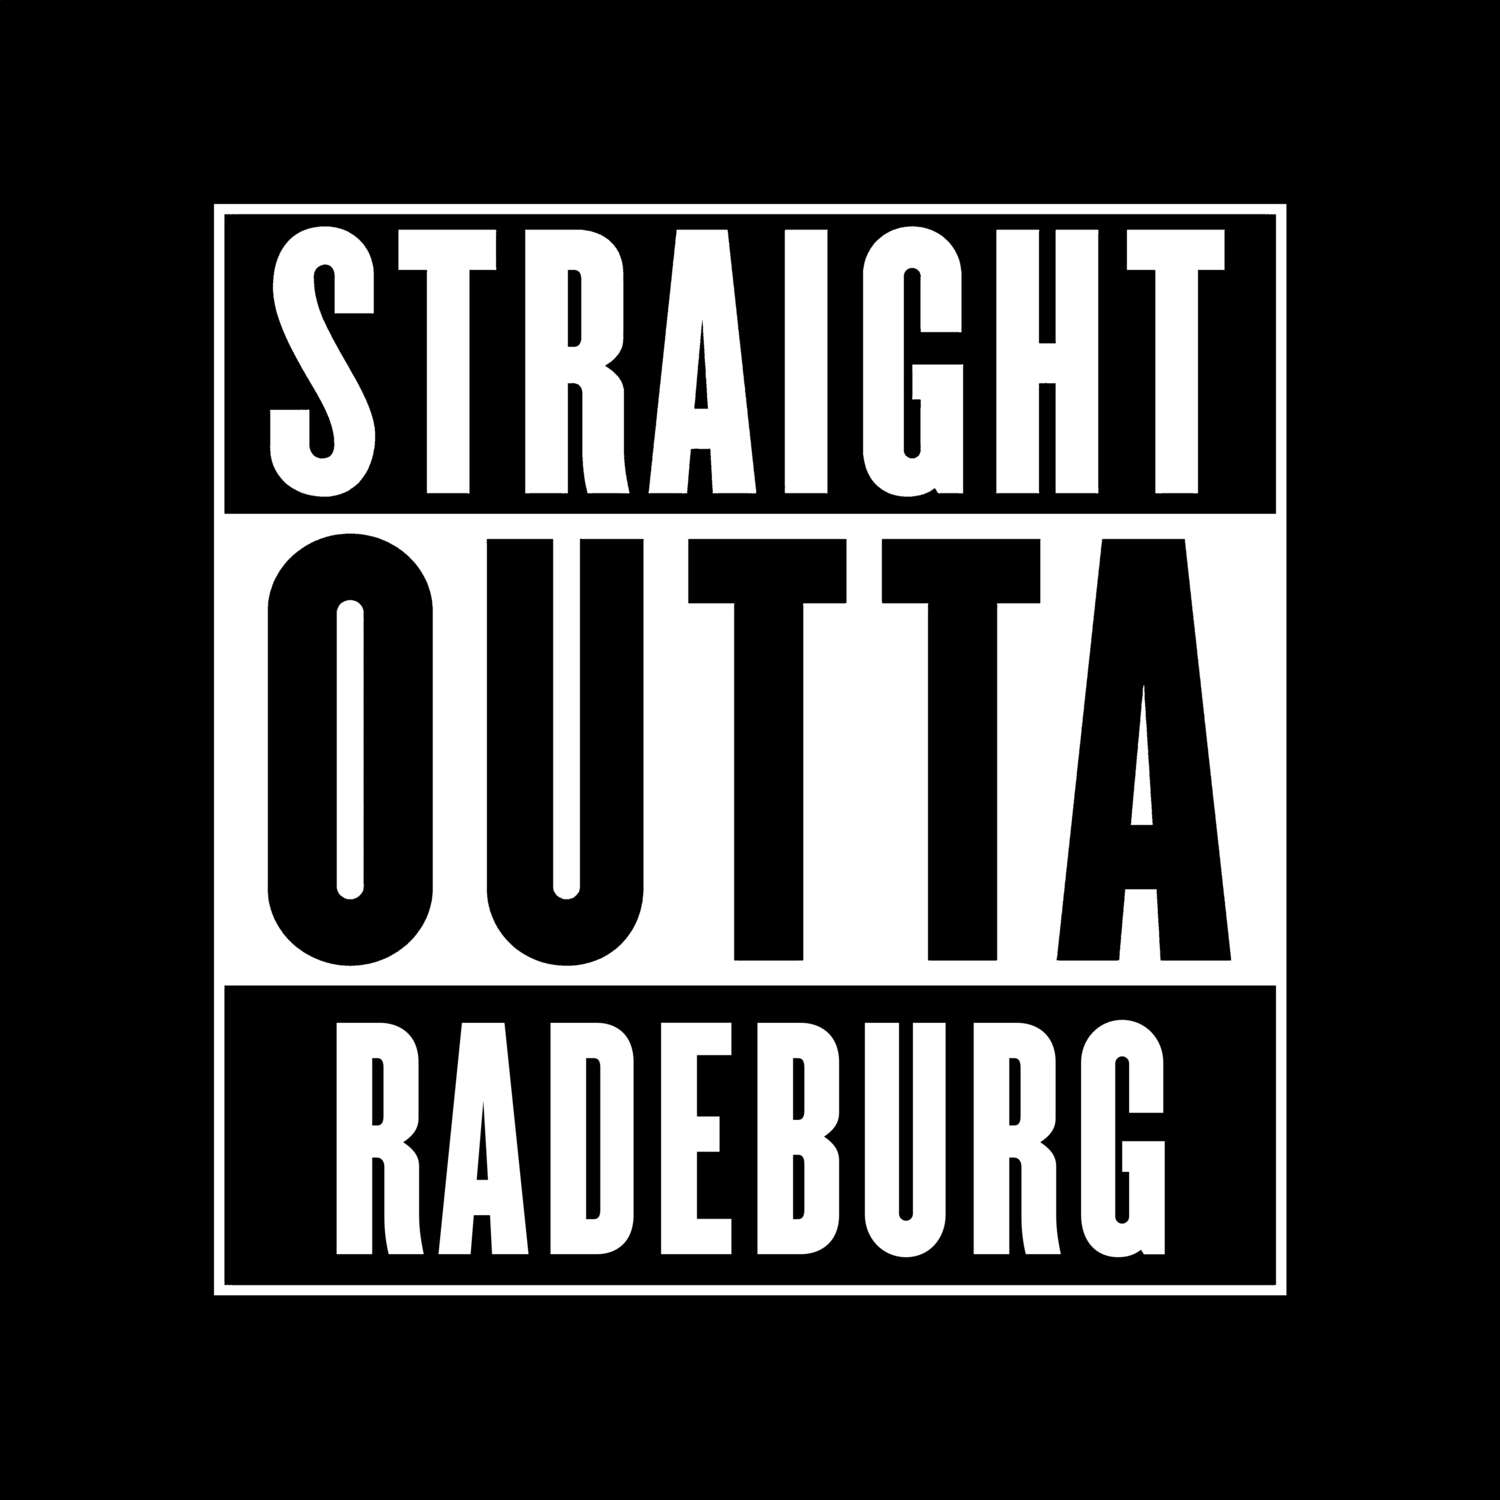 Radeburg T-Shirt »Straight Outta«